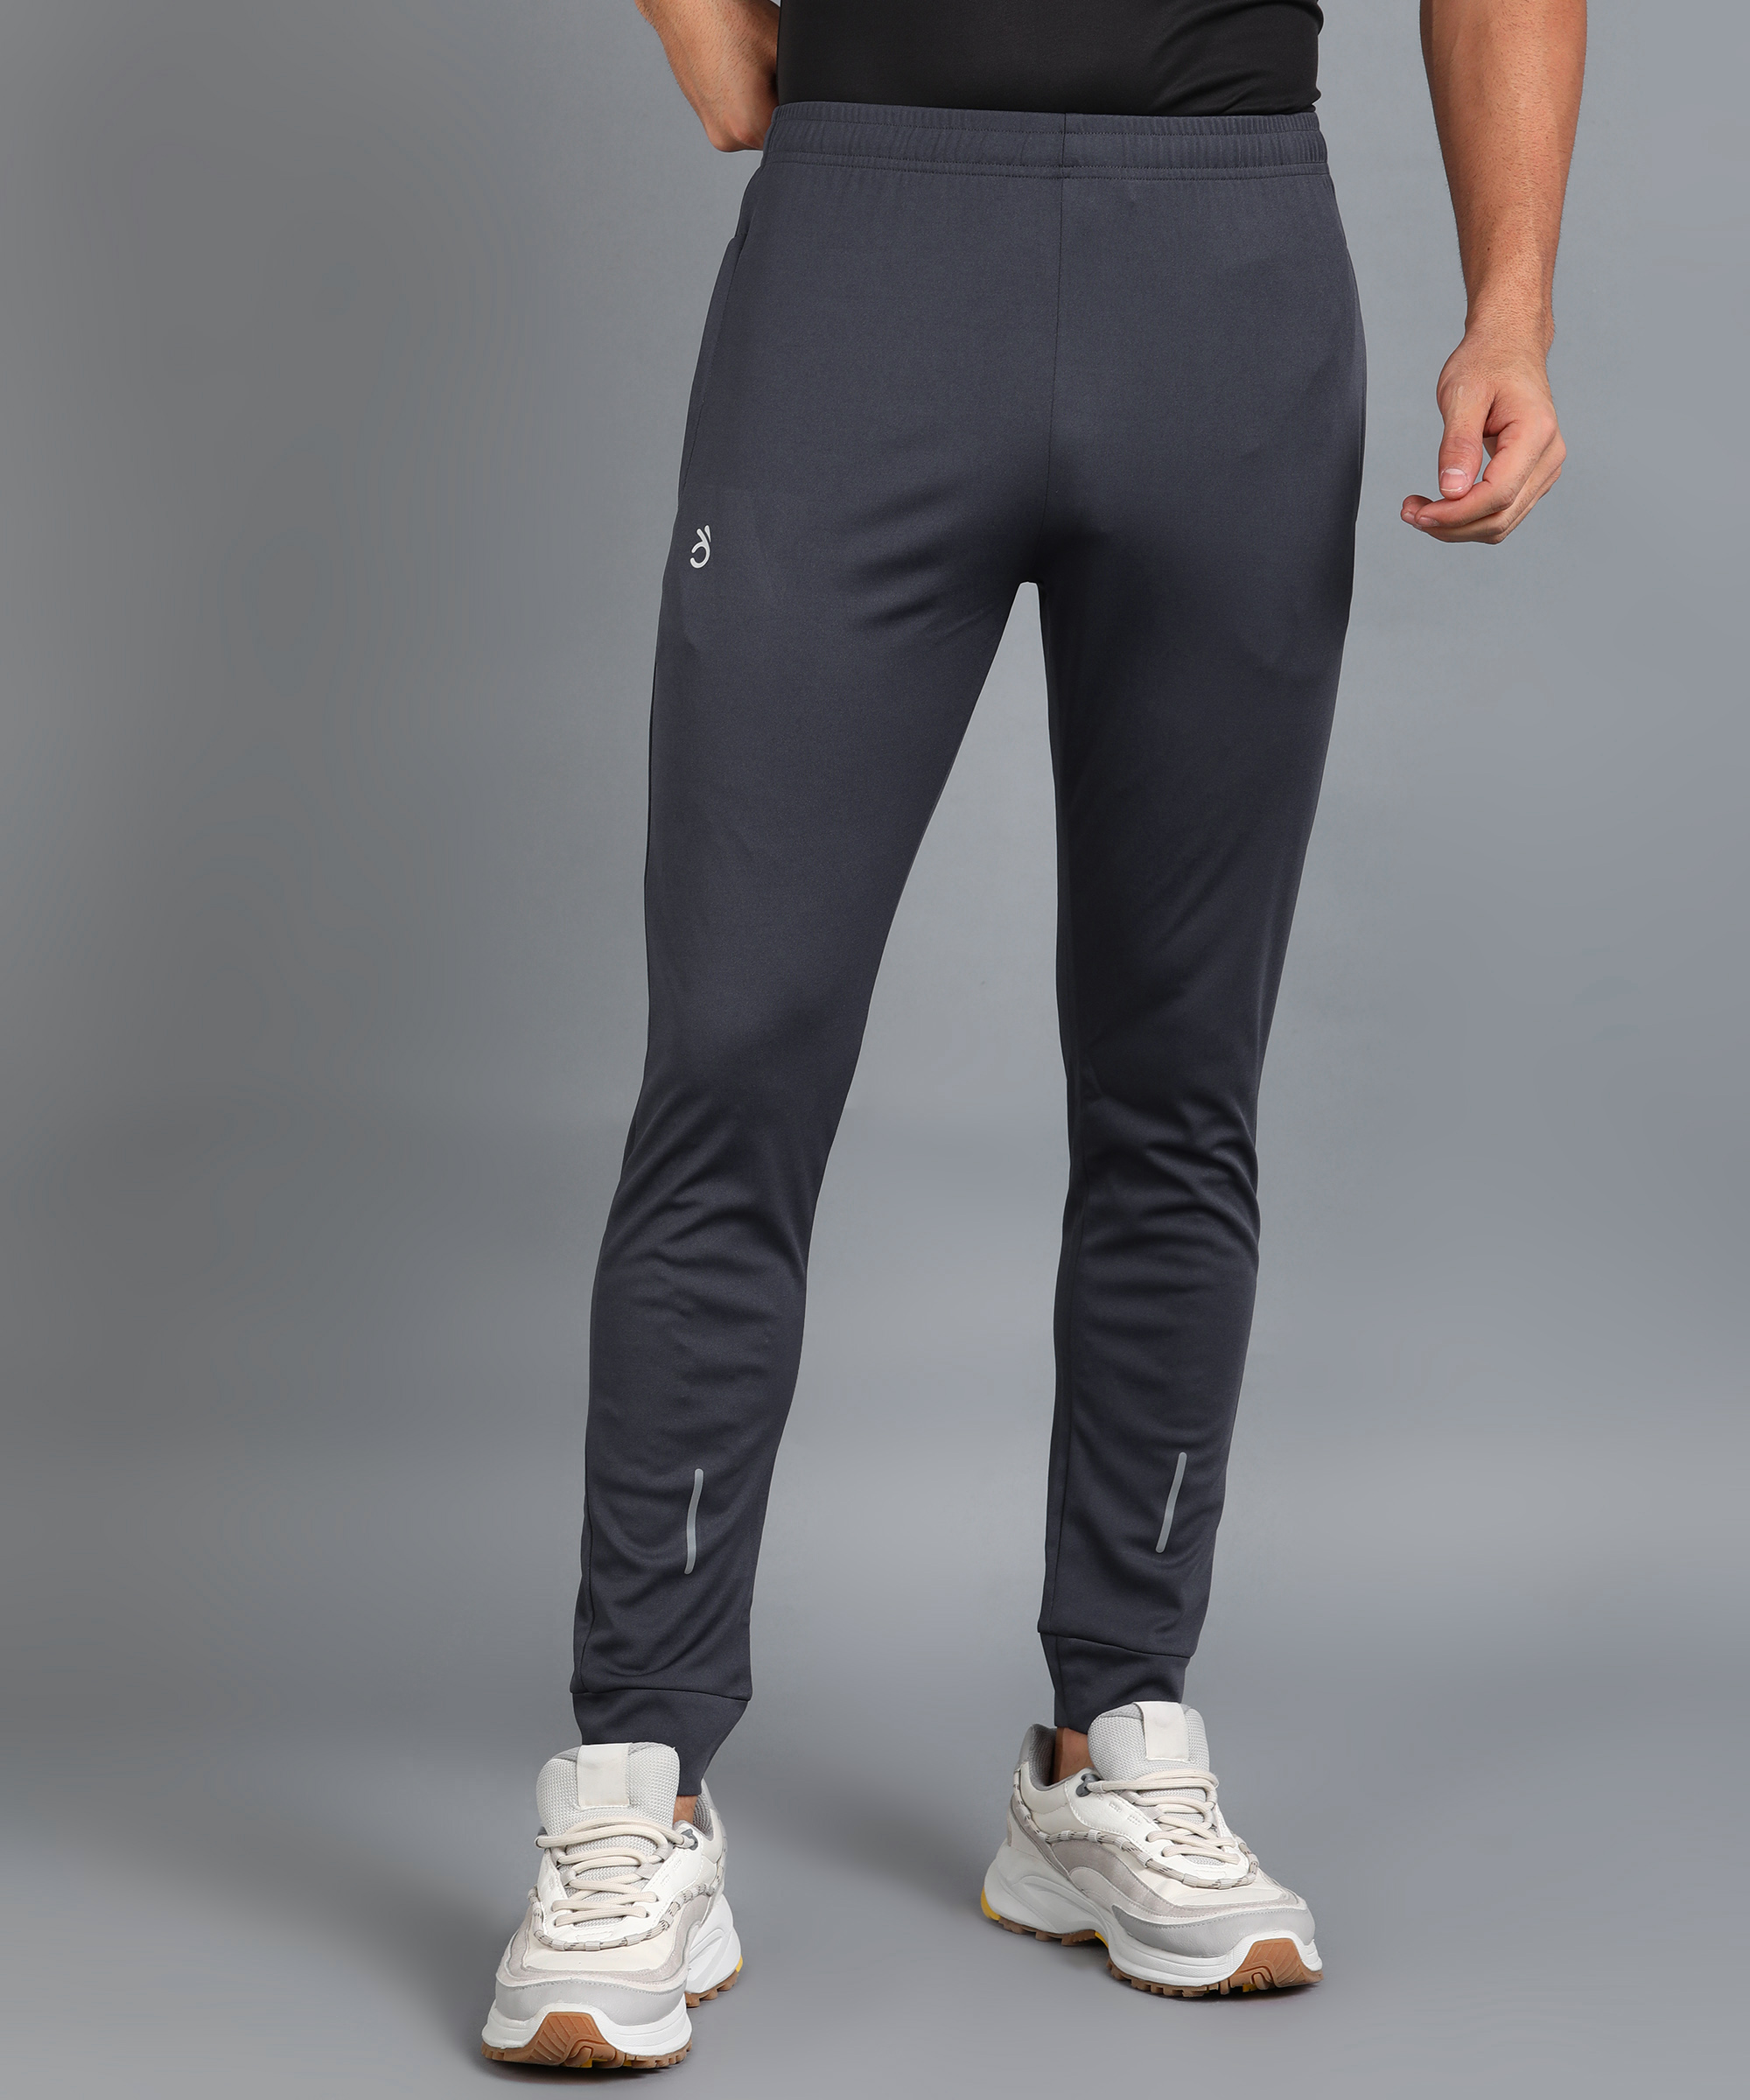 Men's Ankle Length Slim Fit Winter Wear Track Pant/lower for men's